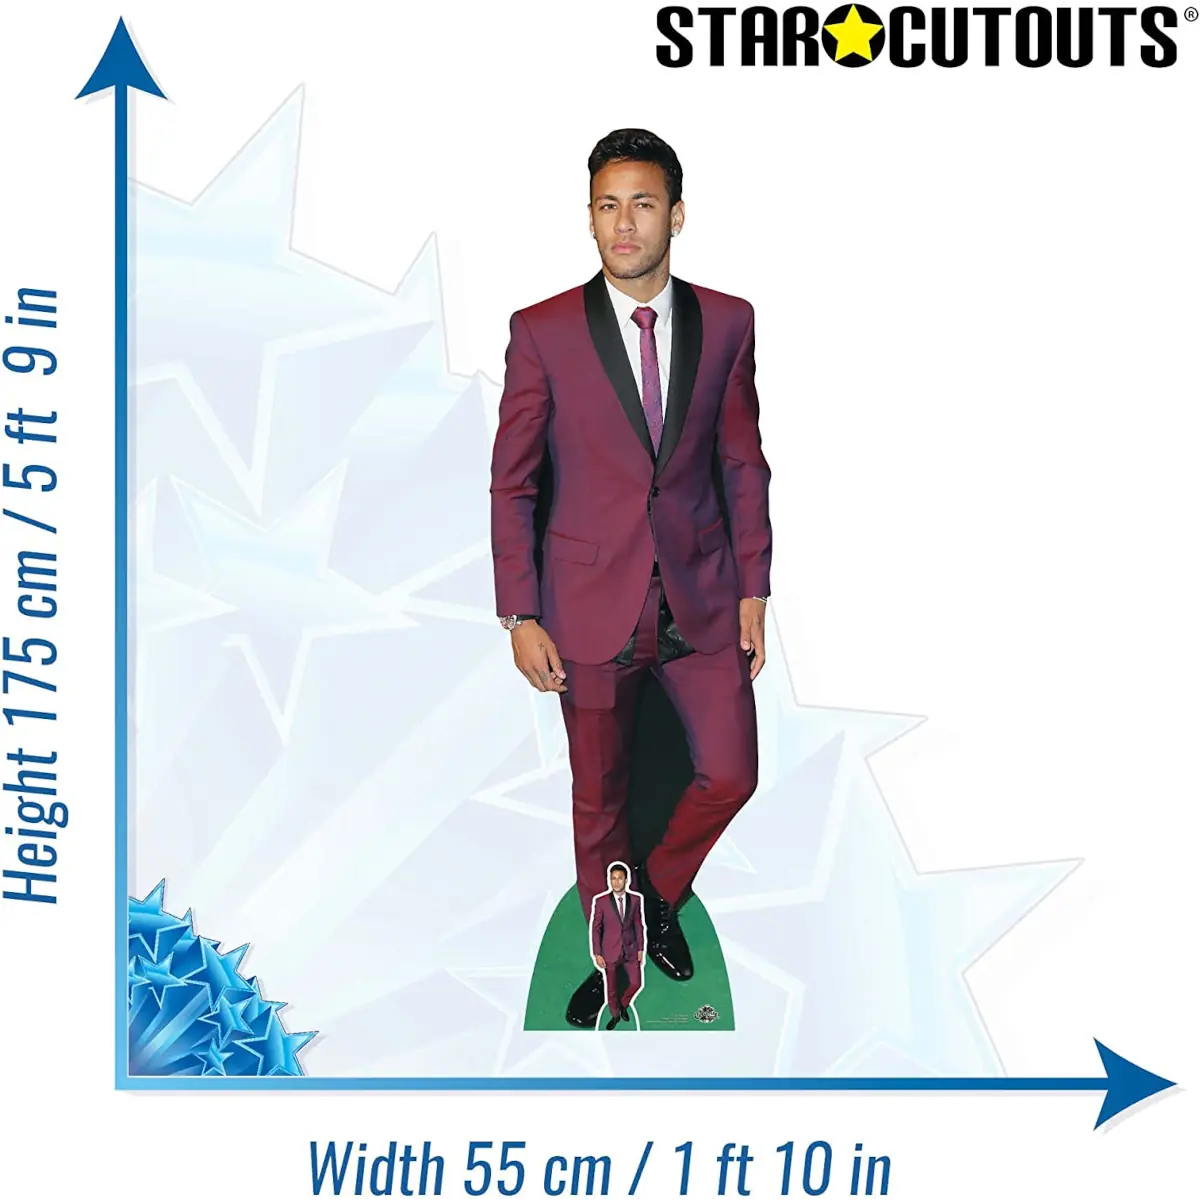 CS742 Neymar Brazilian Footballer Lifesize Mini Cardboard Cutout Standee 2